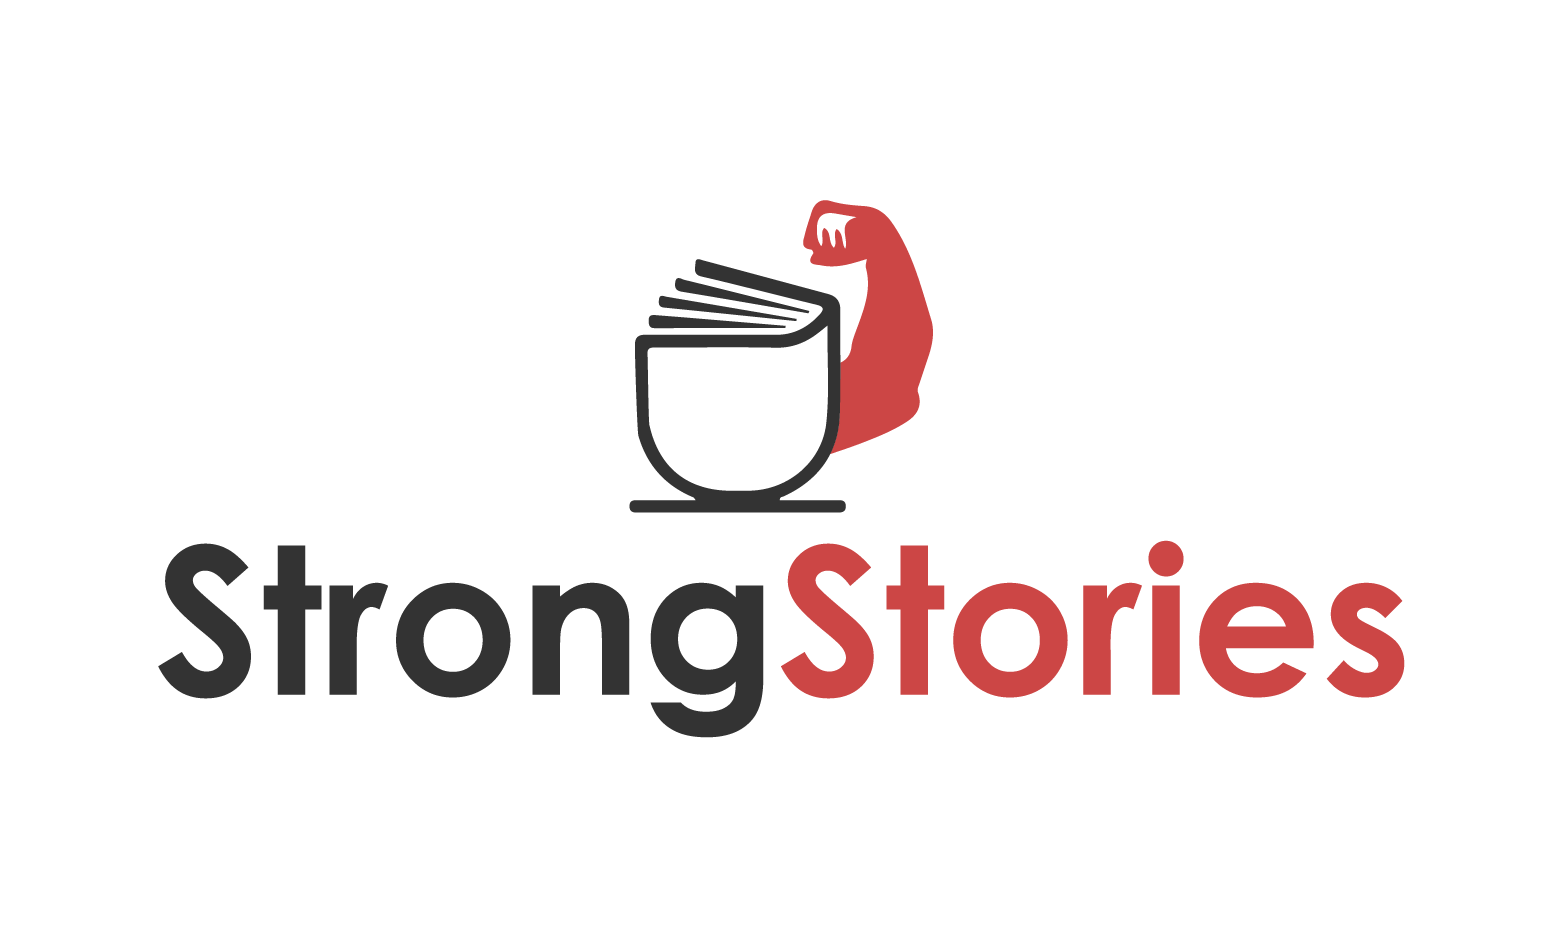 StrongStories.com - Creative brandable domain for sale